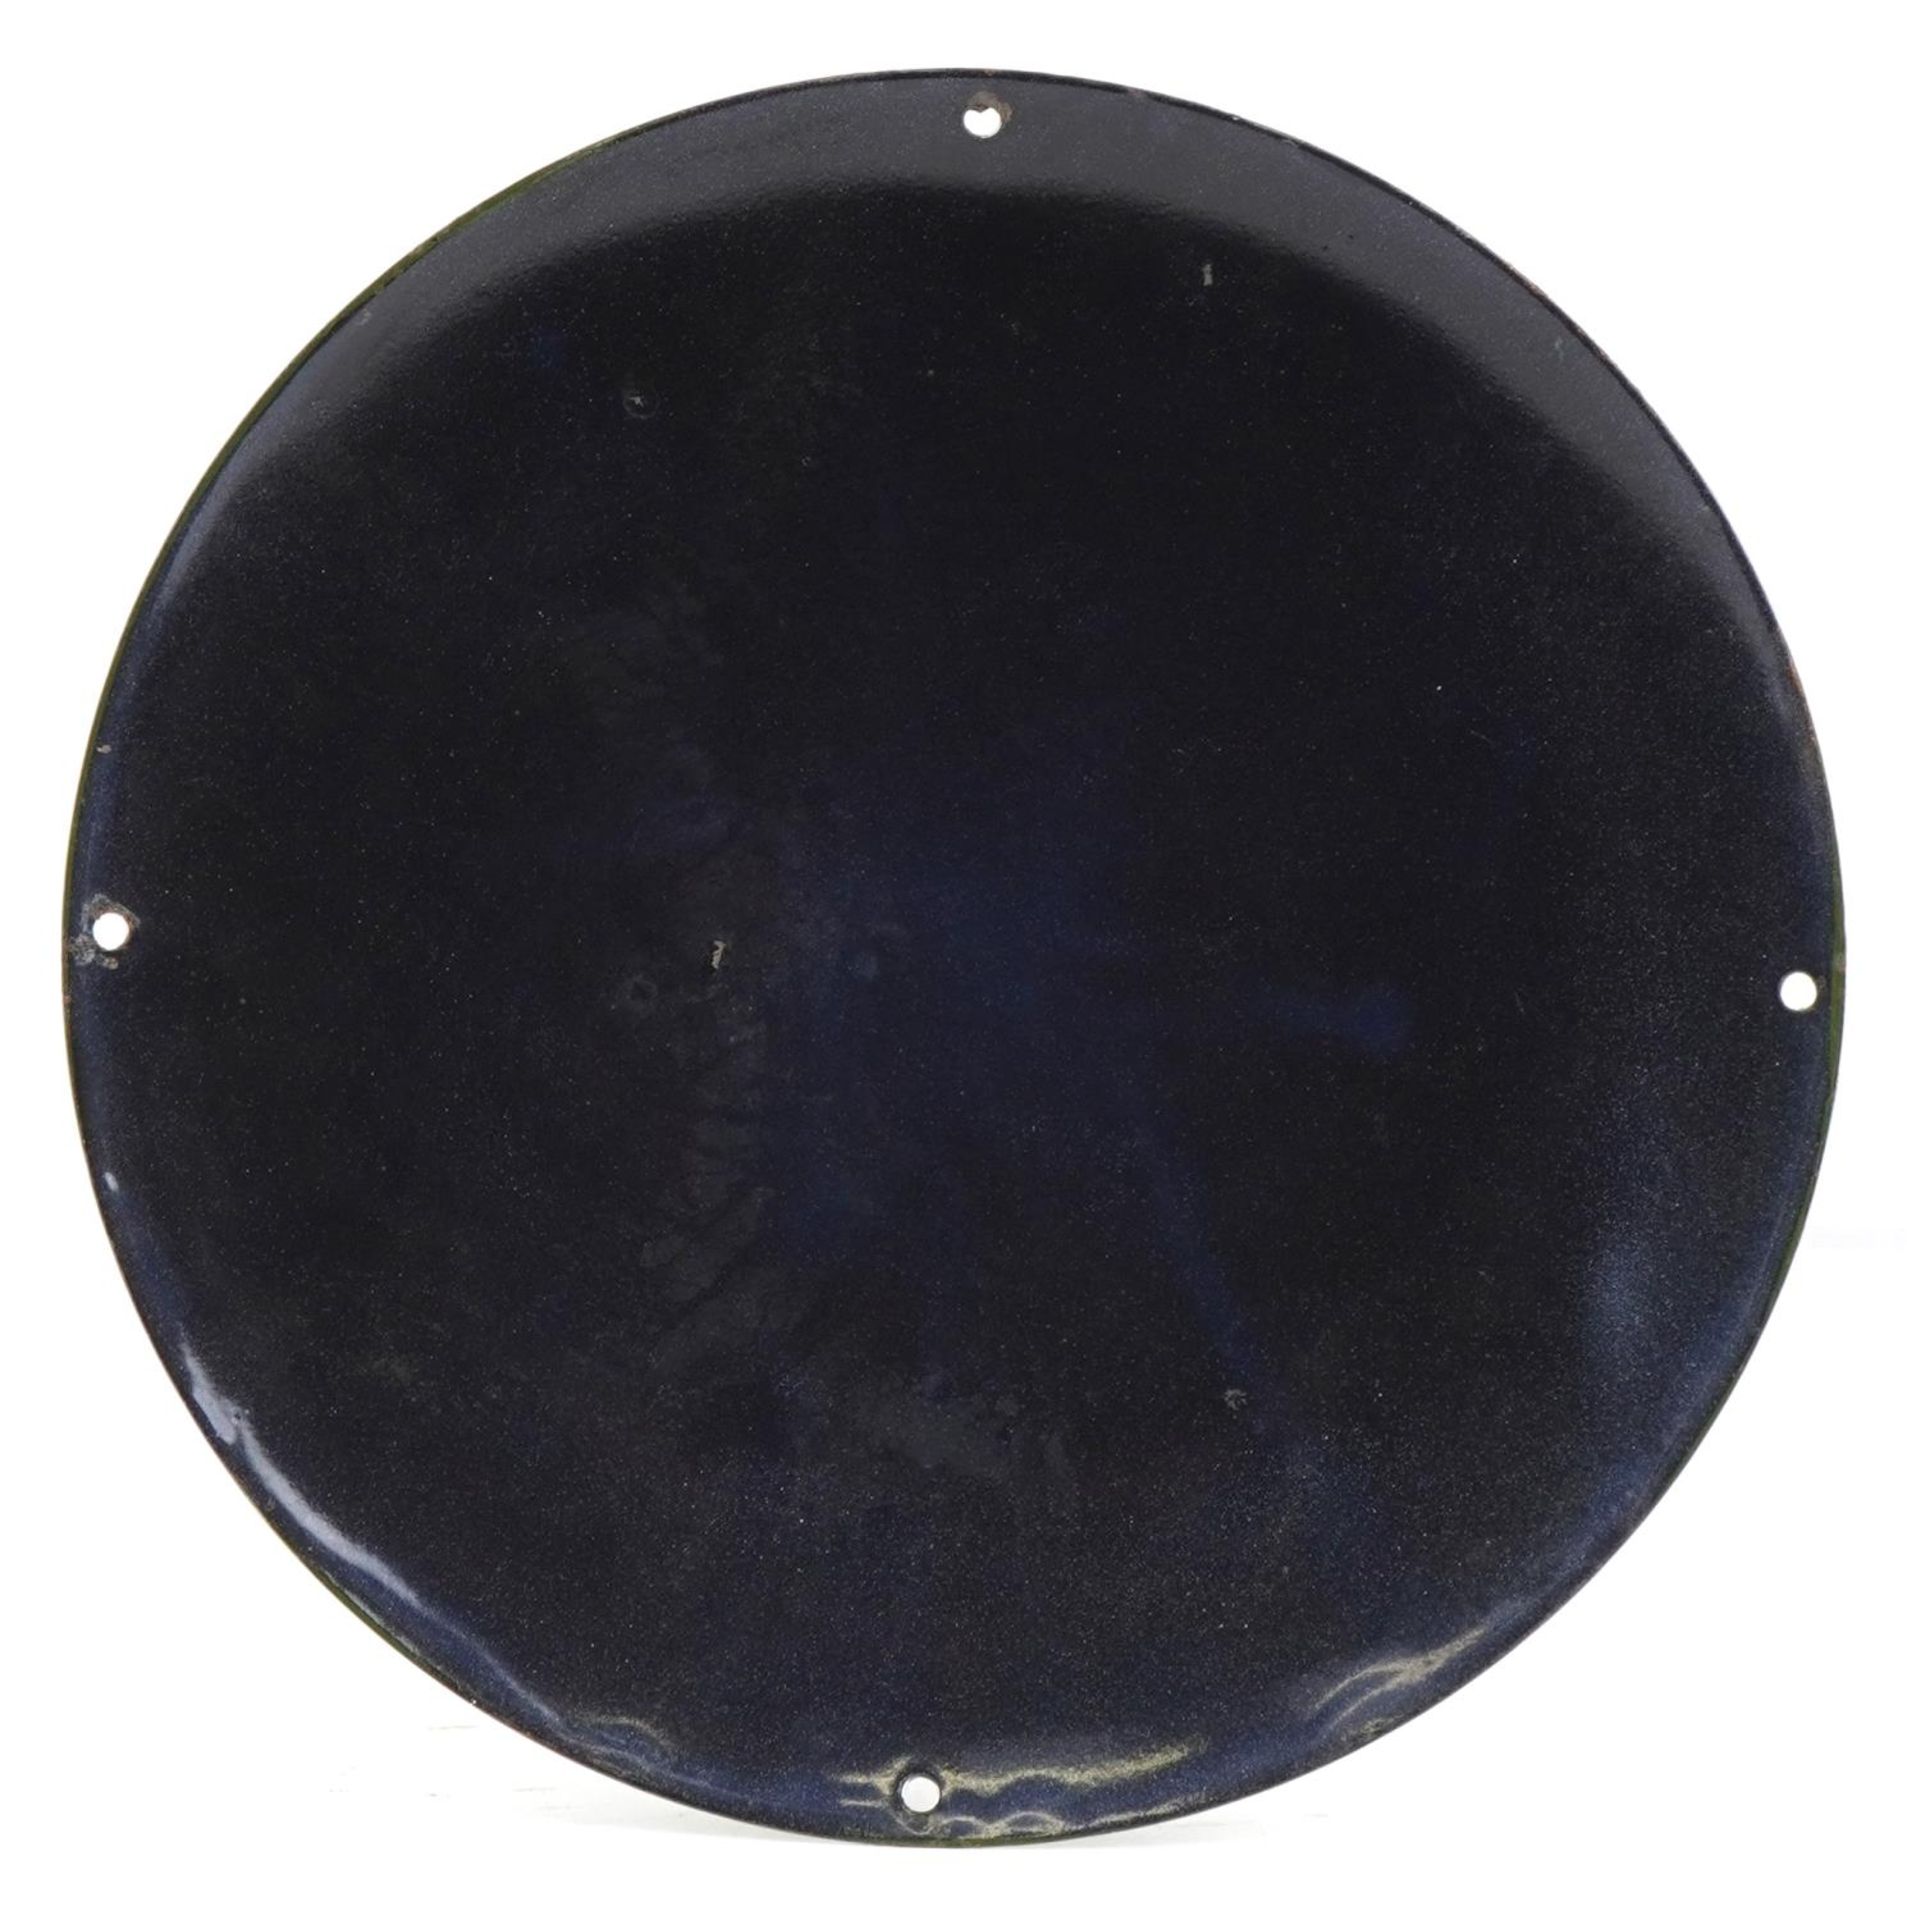 Rolex Submariner convex enamel advertising sign, 29.5cm in diameter : For further information on - Bild 2 aus 2